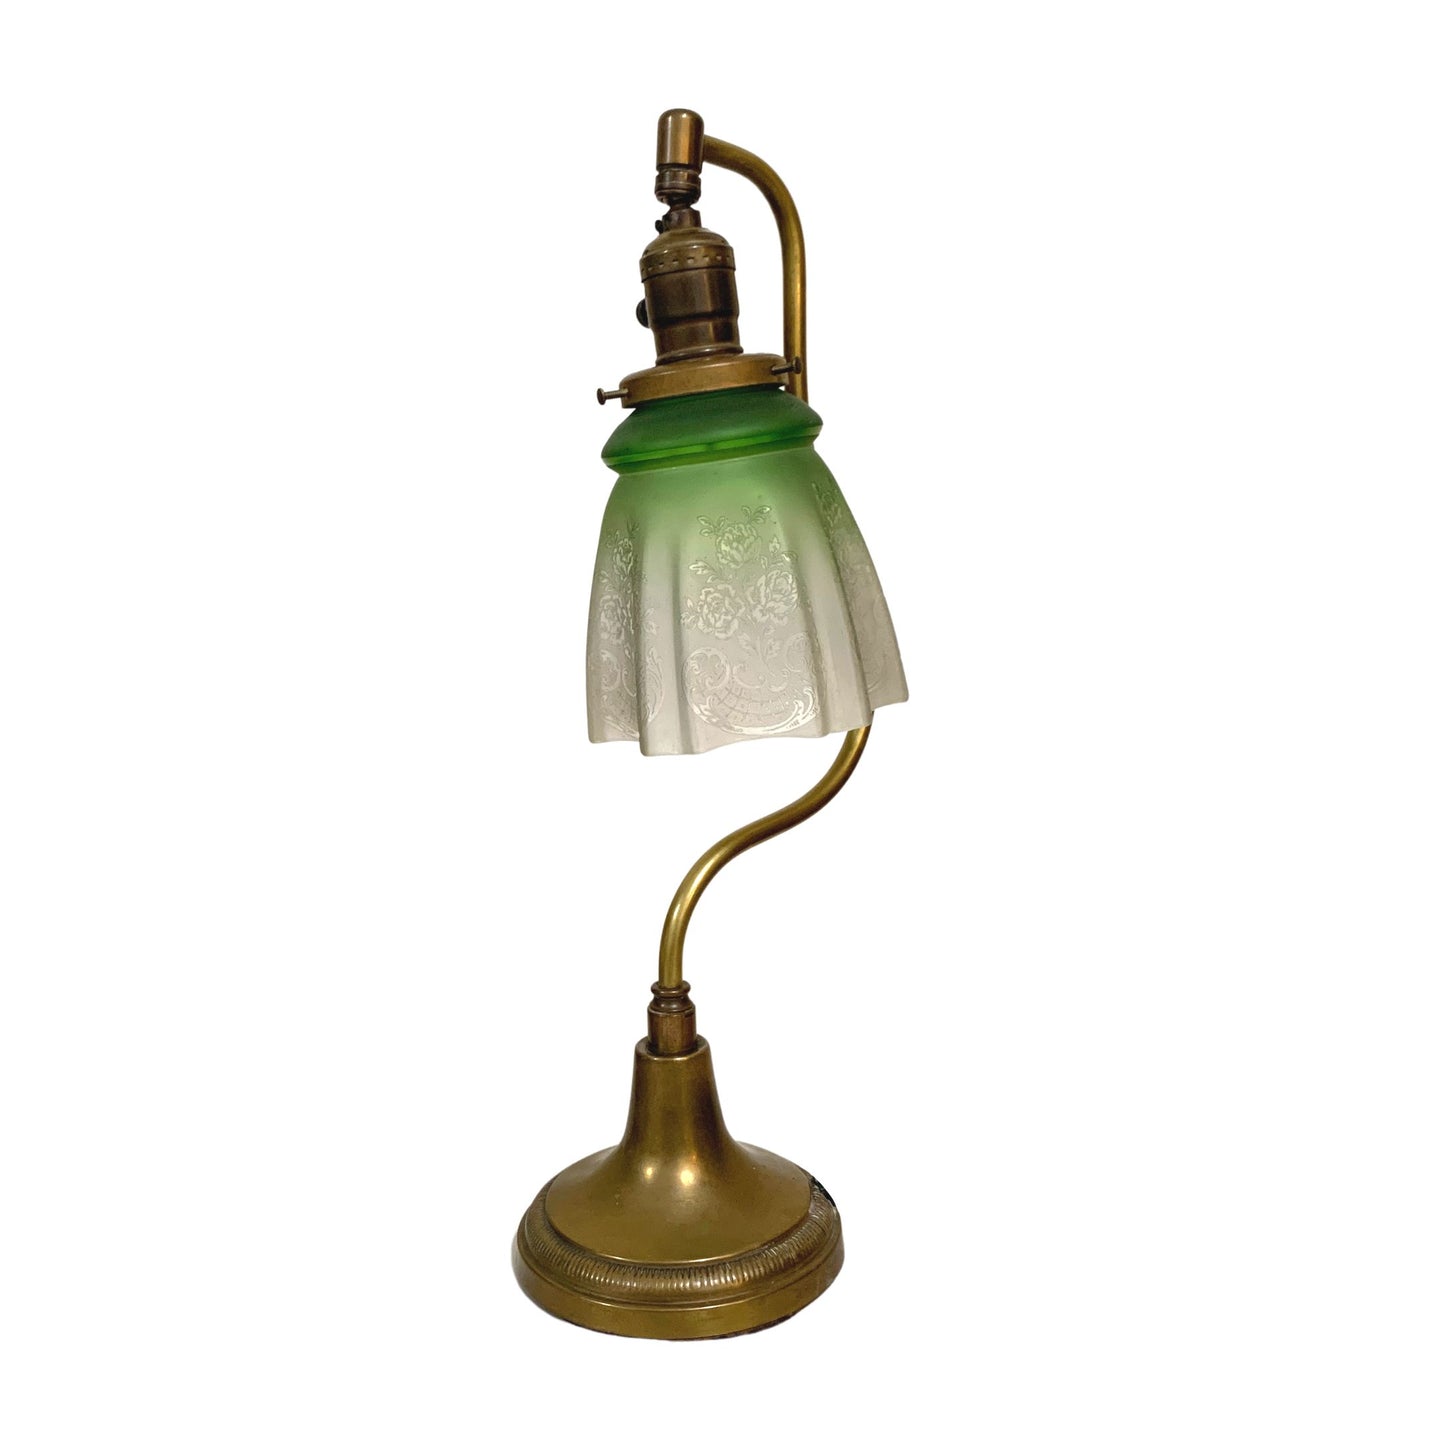 Antique Brass Goose Neck Desk Lamp